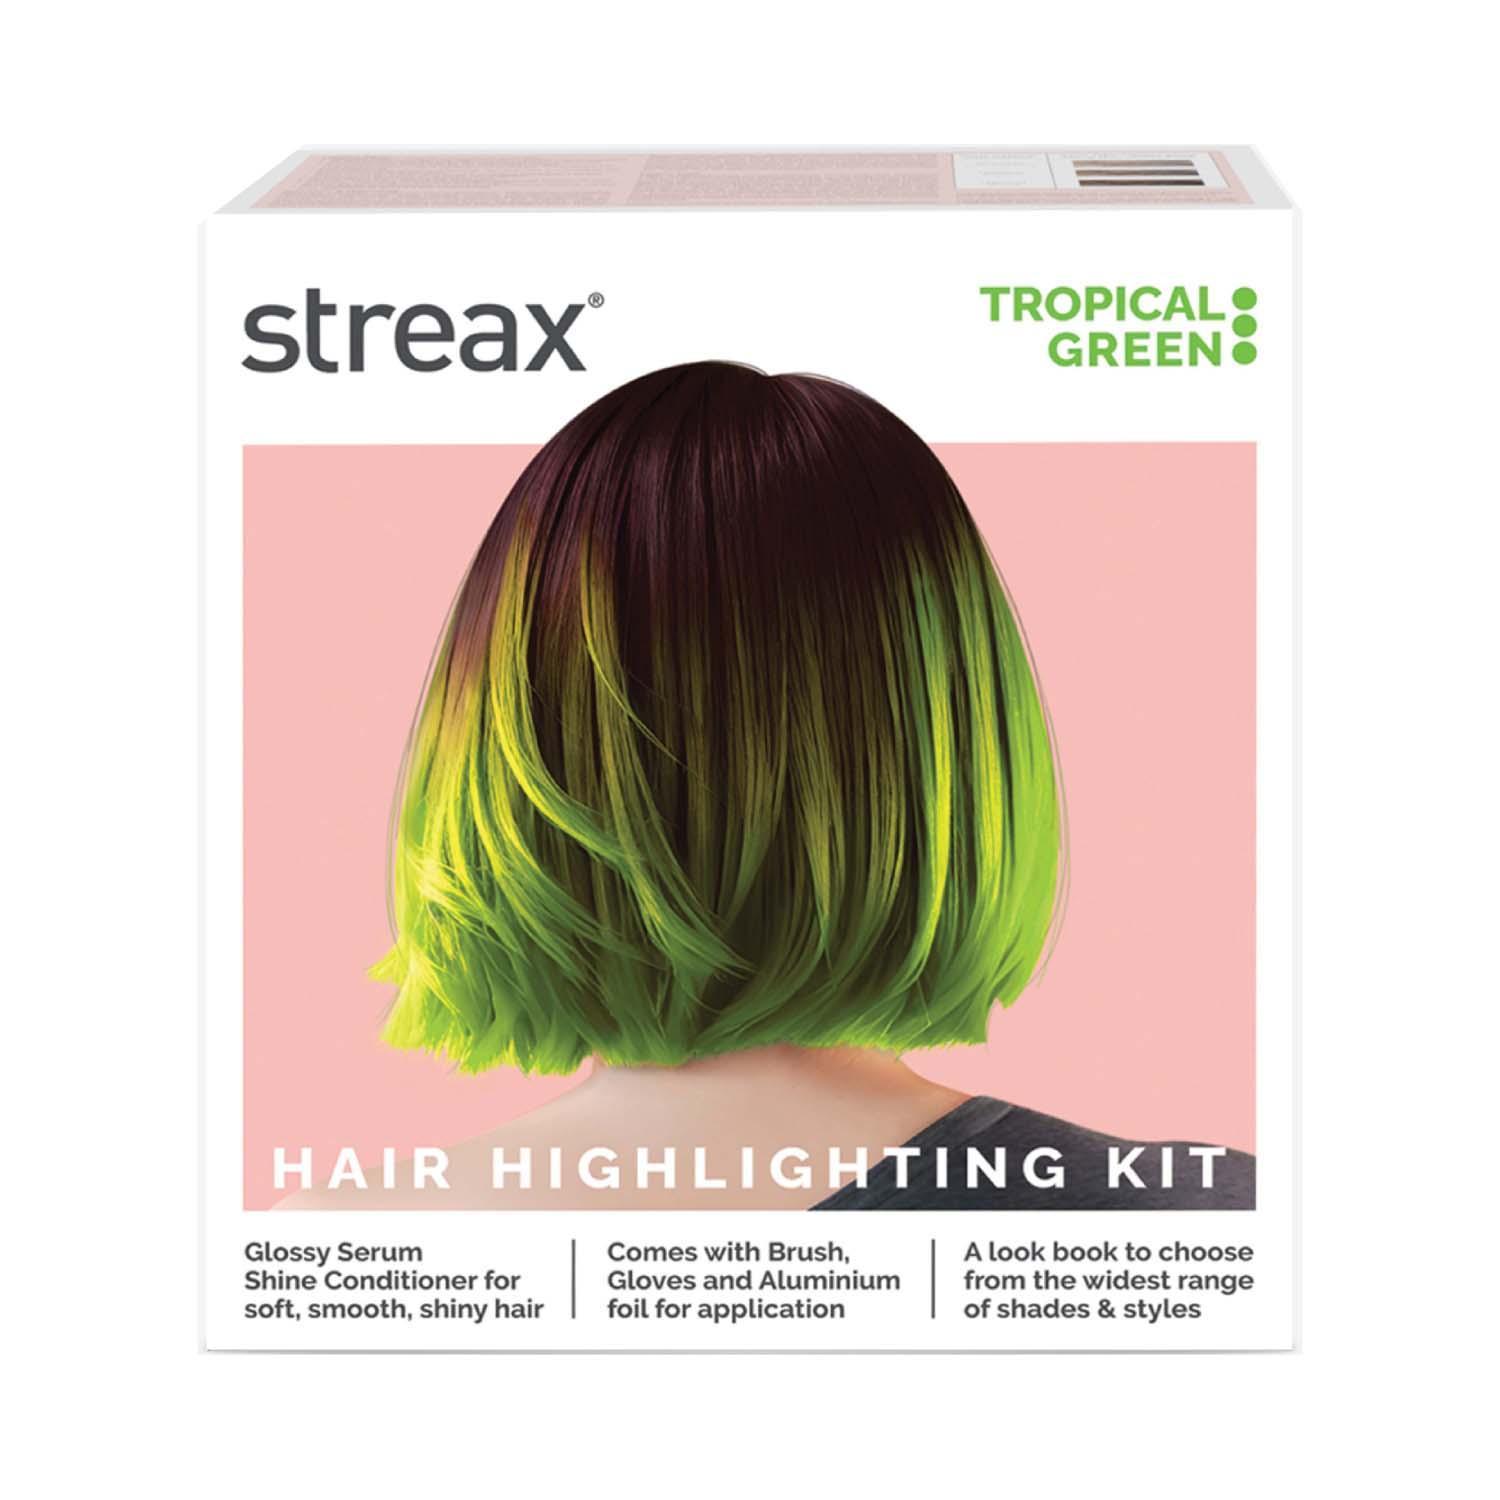 streax ultralights hair color highlight kit - tropical green (180 g)